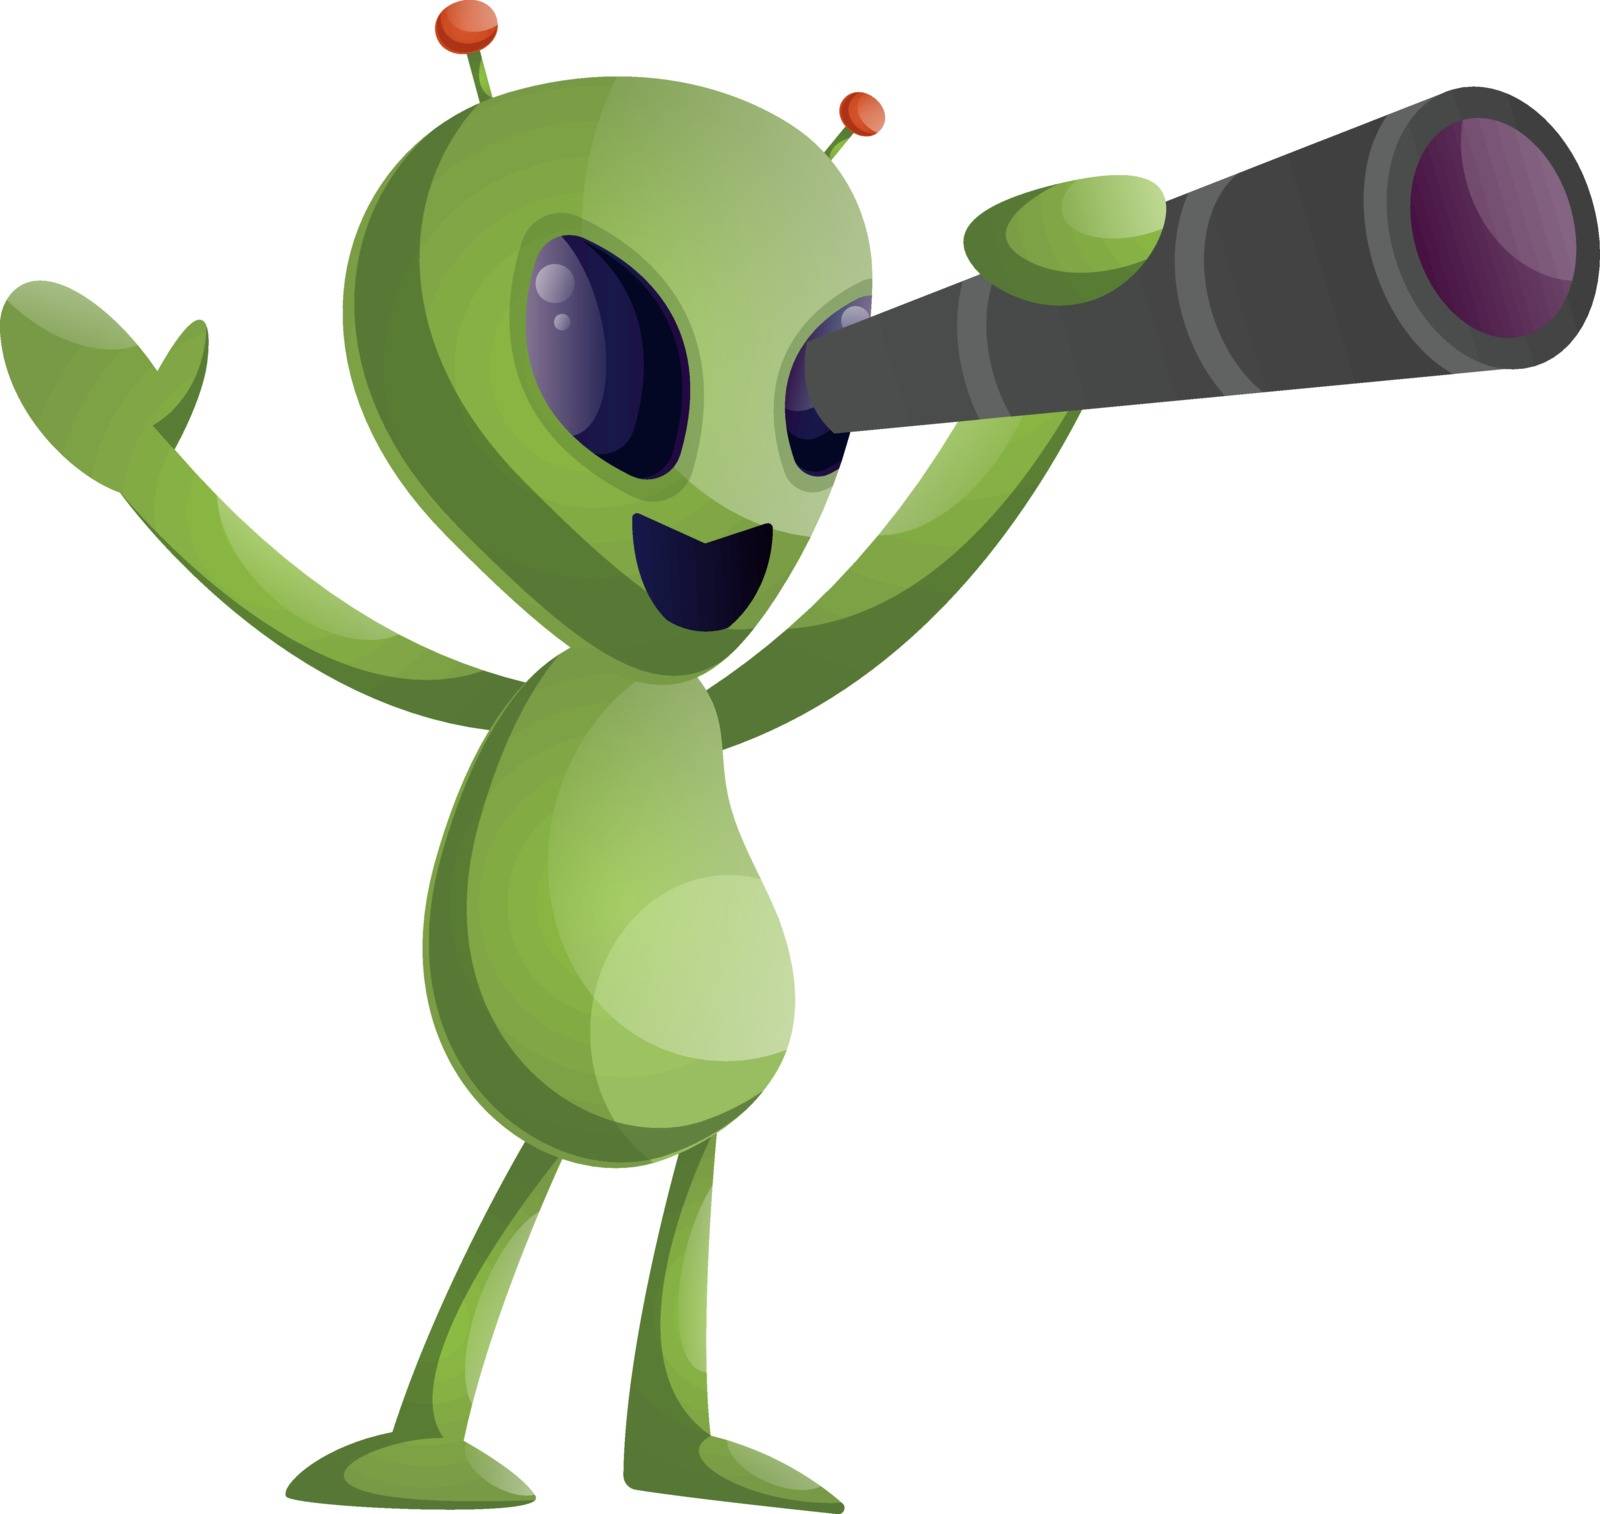 Alien with telescope, illustration, vector on white background.